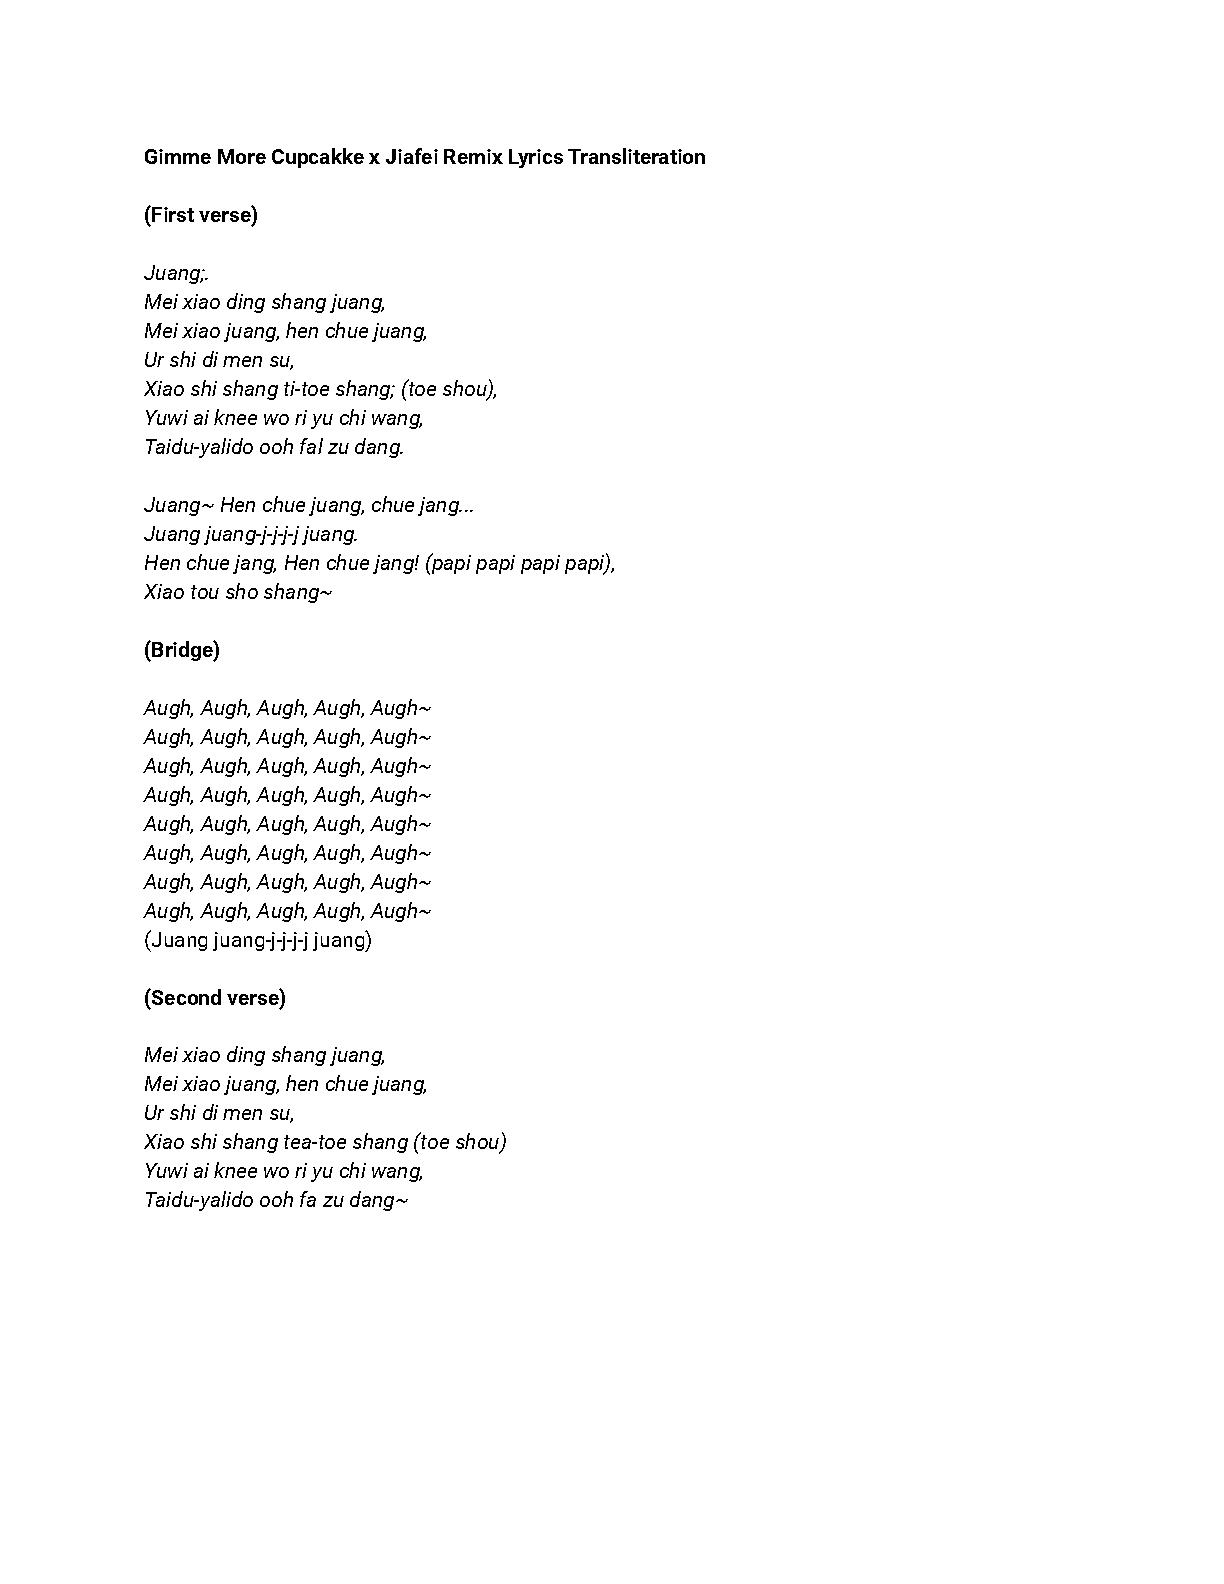 Jiafei Says Goodbye - song and lyrics by sunco, Jiafei